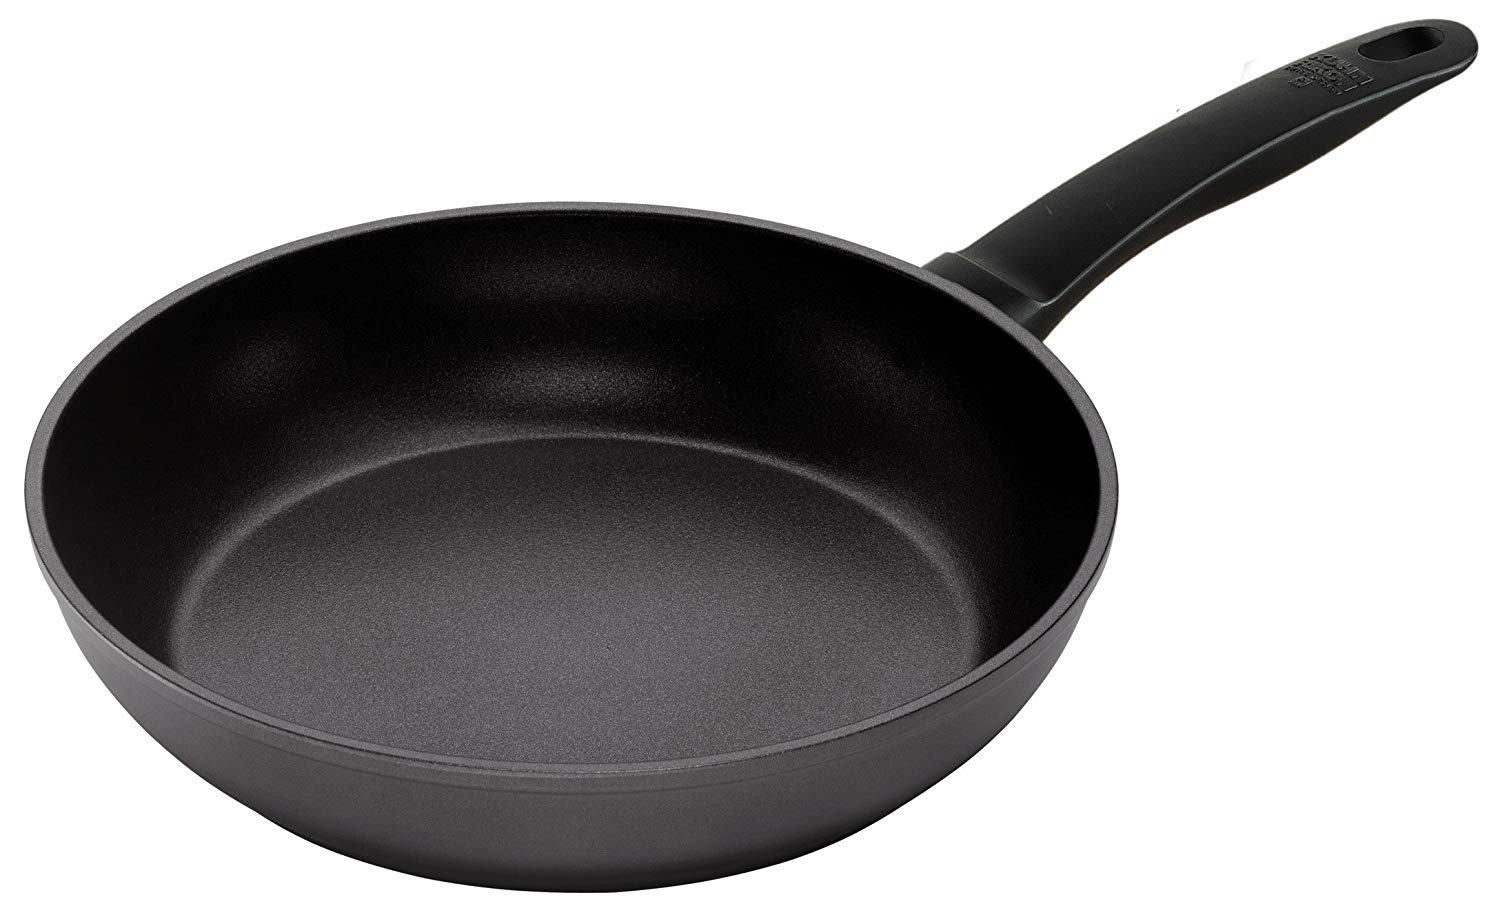 Kuhn Rikon 22 Cm Easy Induction Non Stick Frying Pan, Black